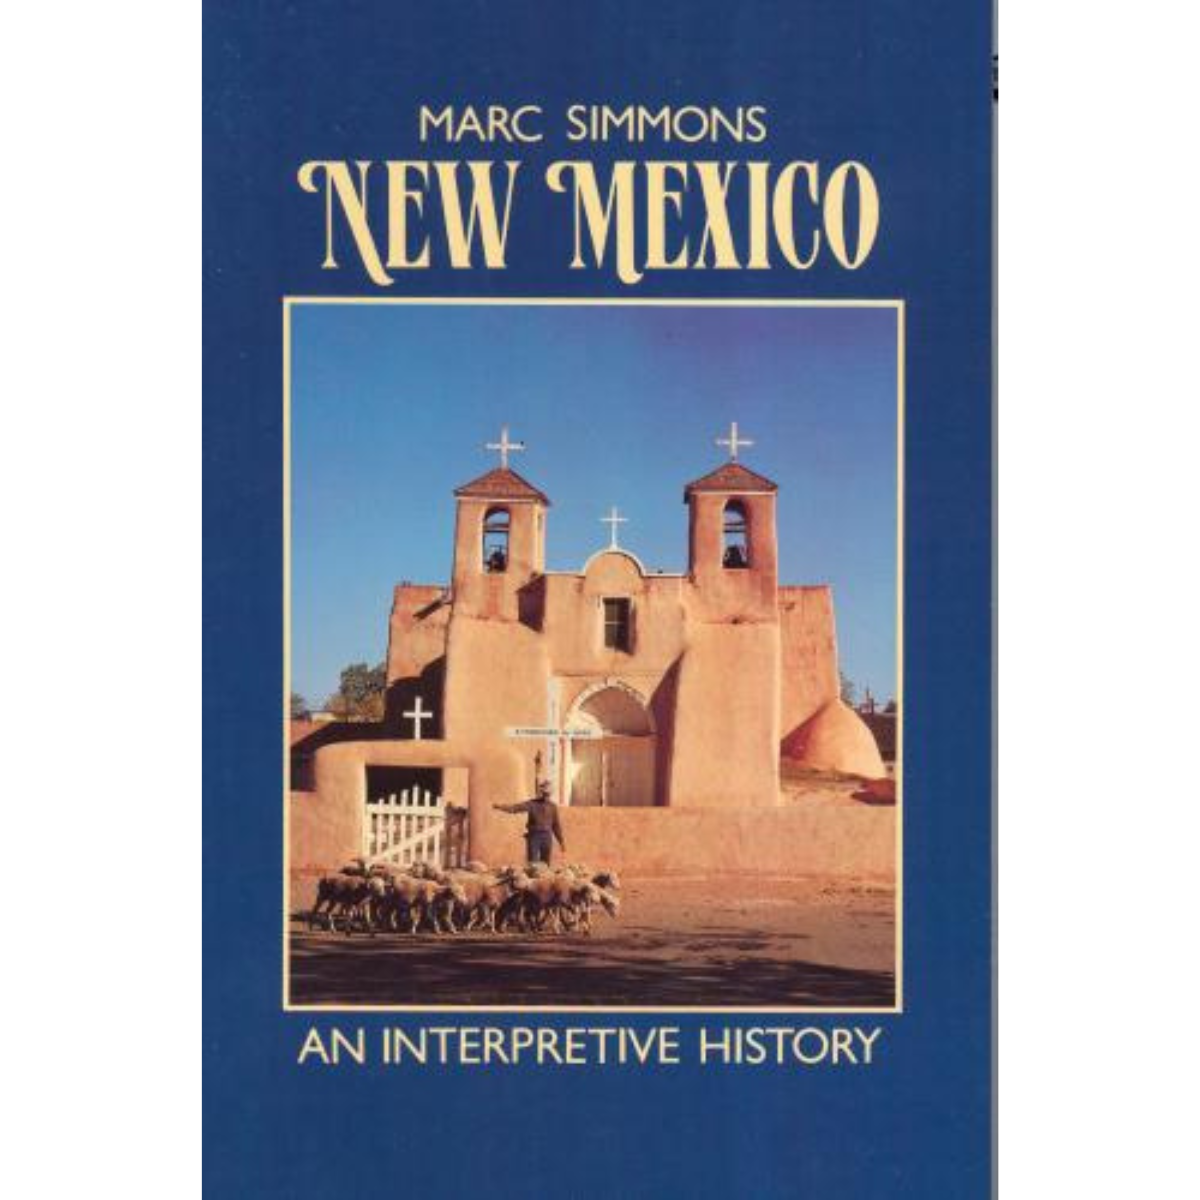 New Mexico - An Interpretive History